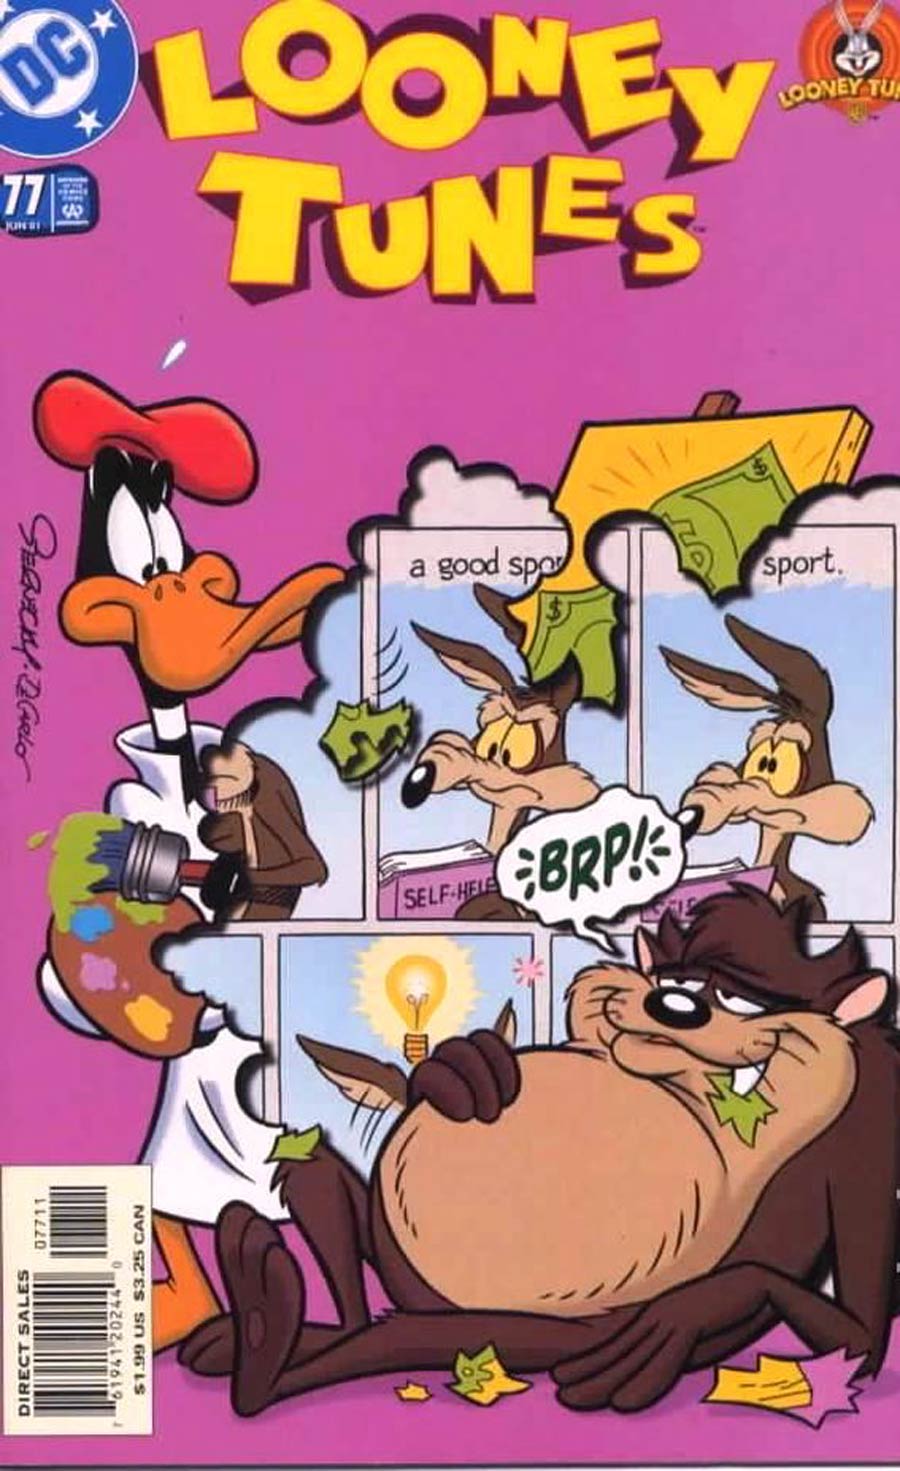 Looney Tunes Vol 3 #77